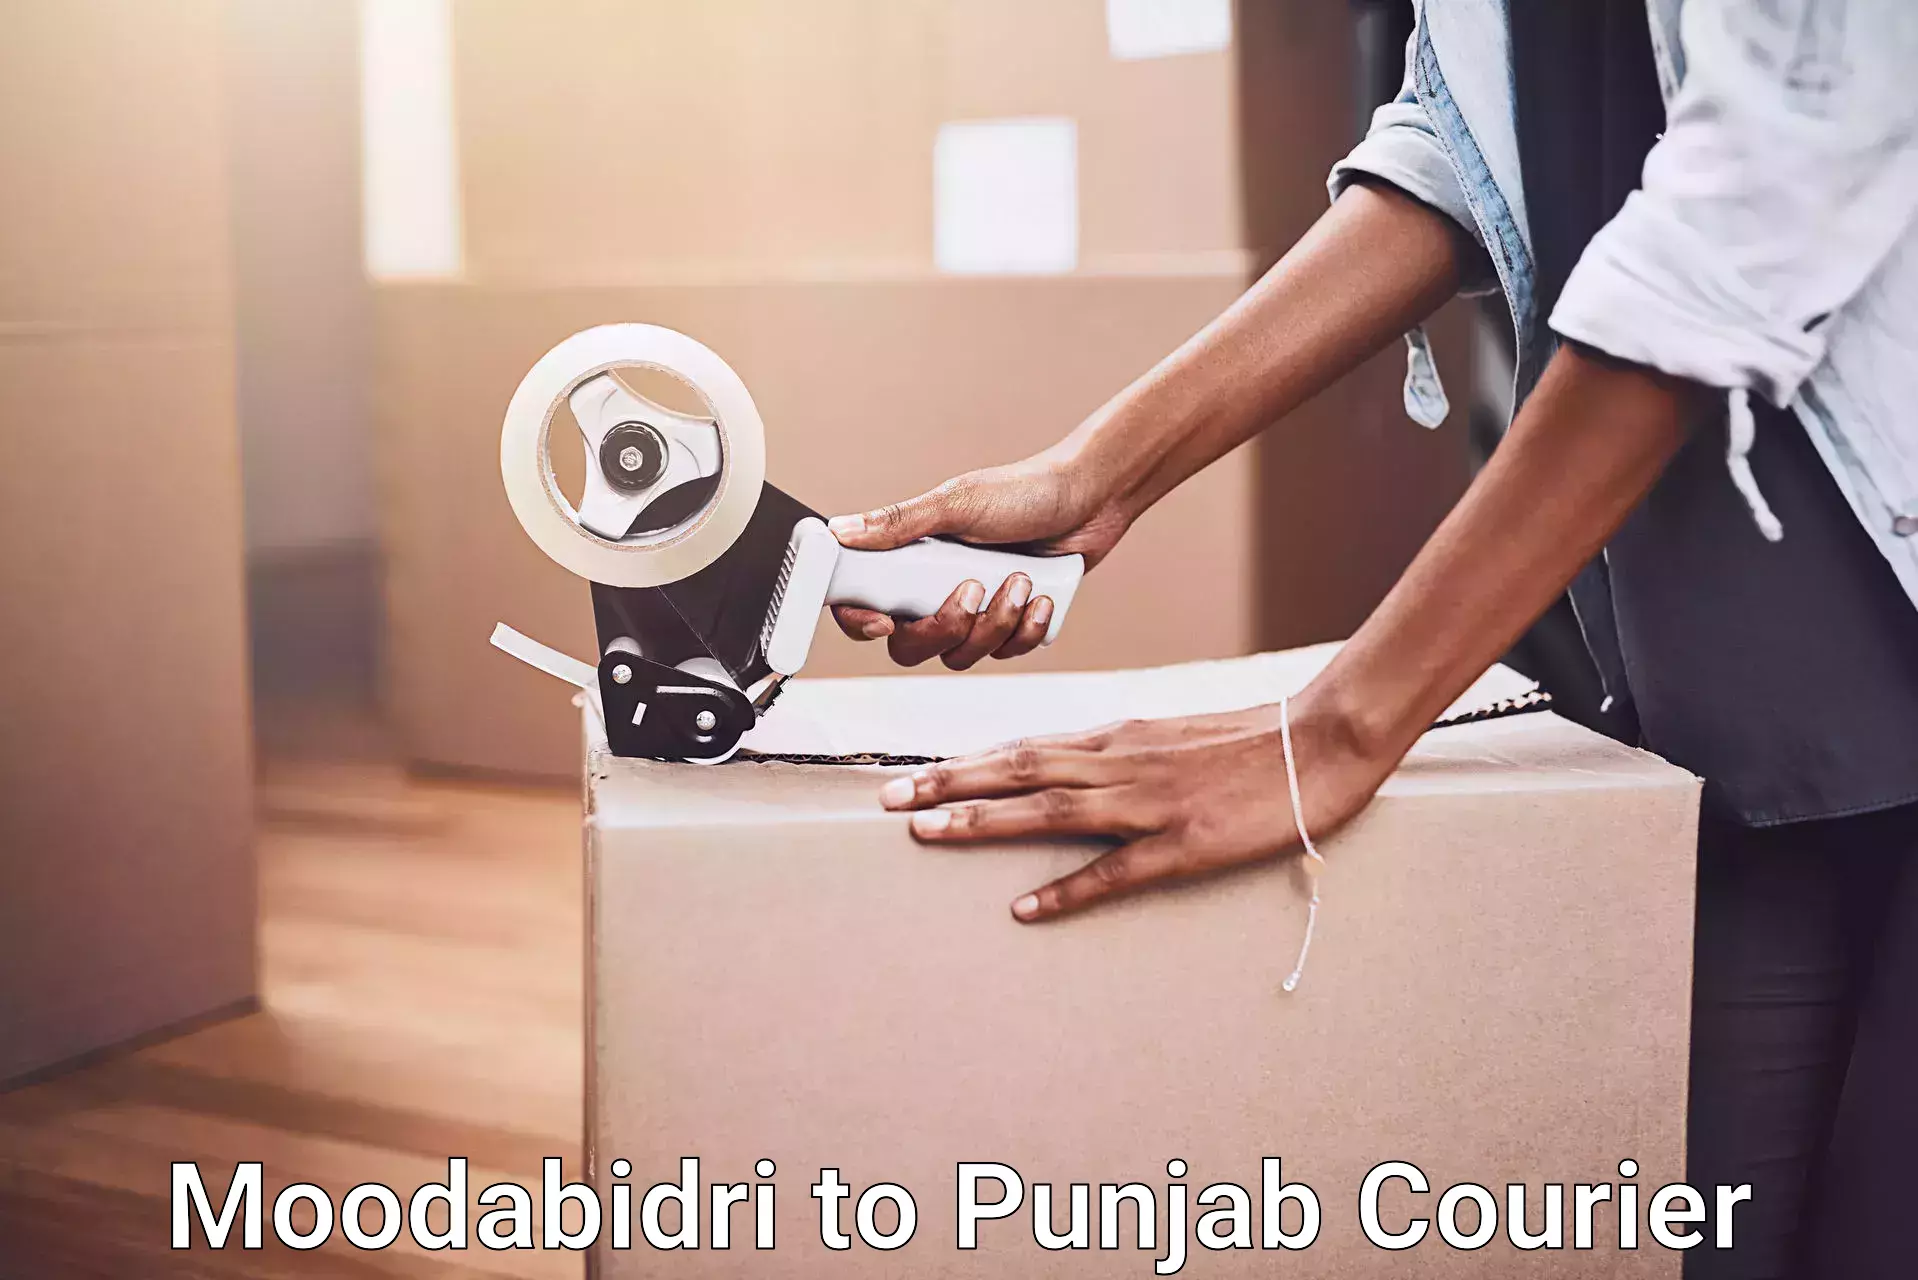 Trusted home movers Moodabidri to Punjab